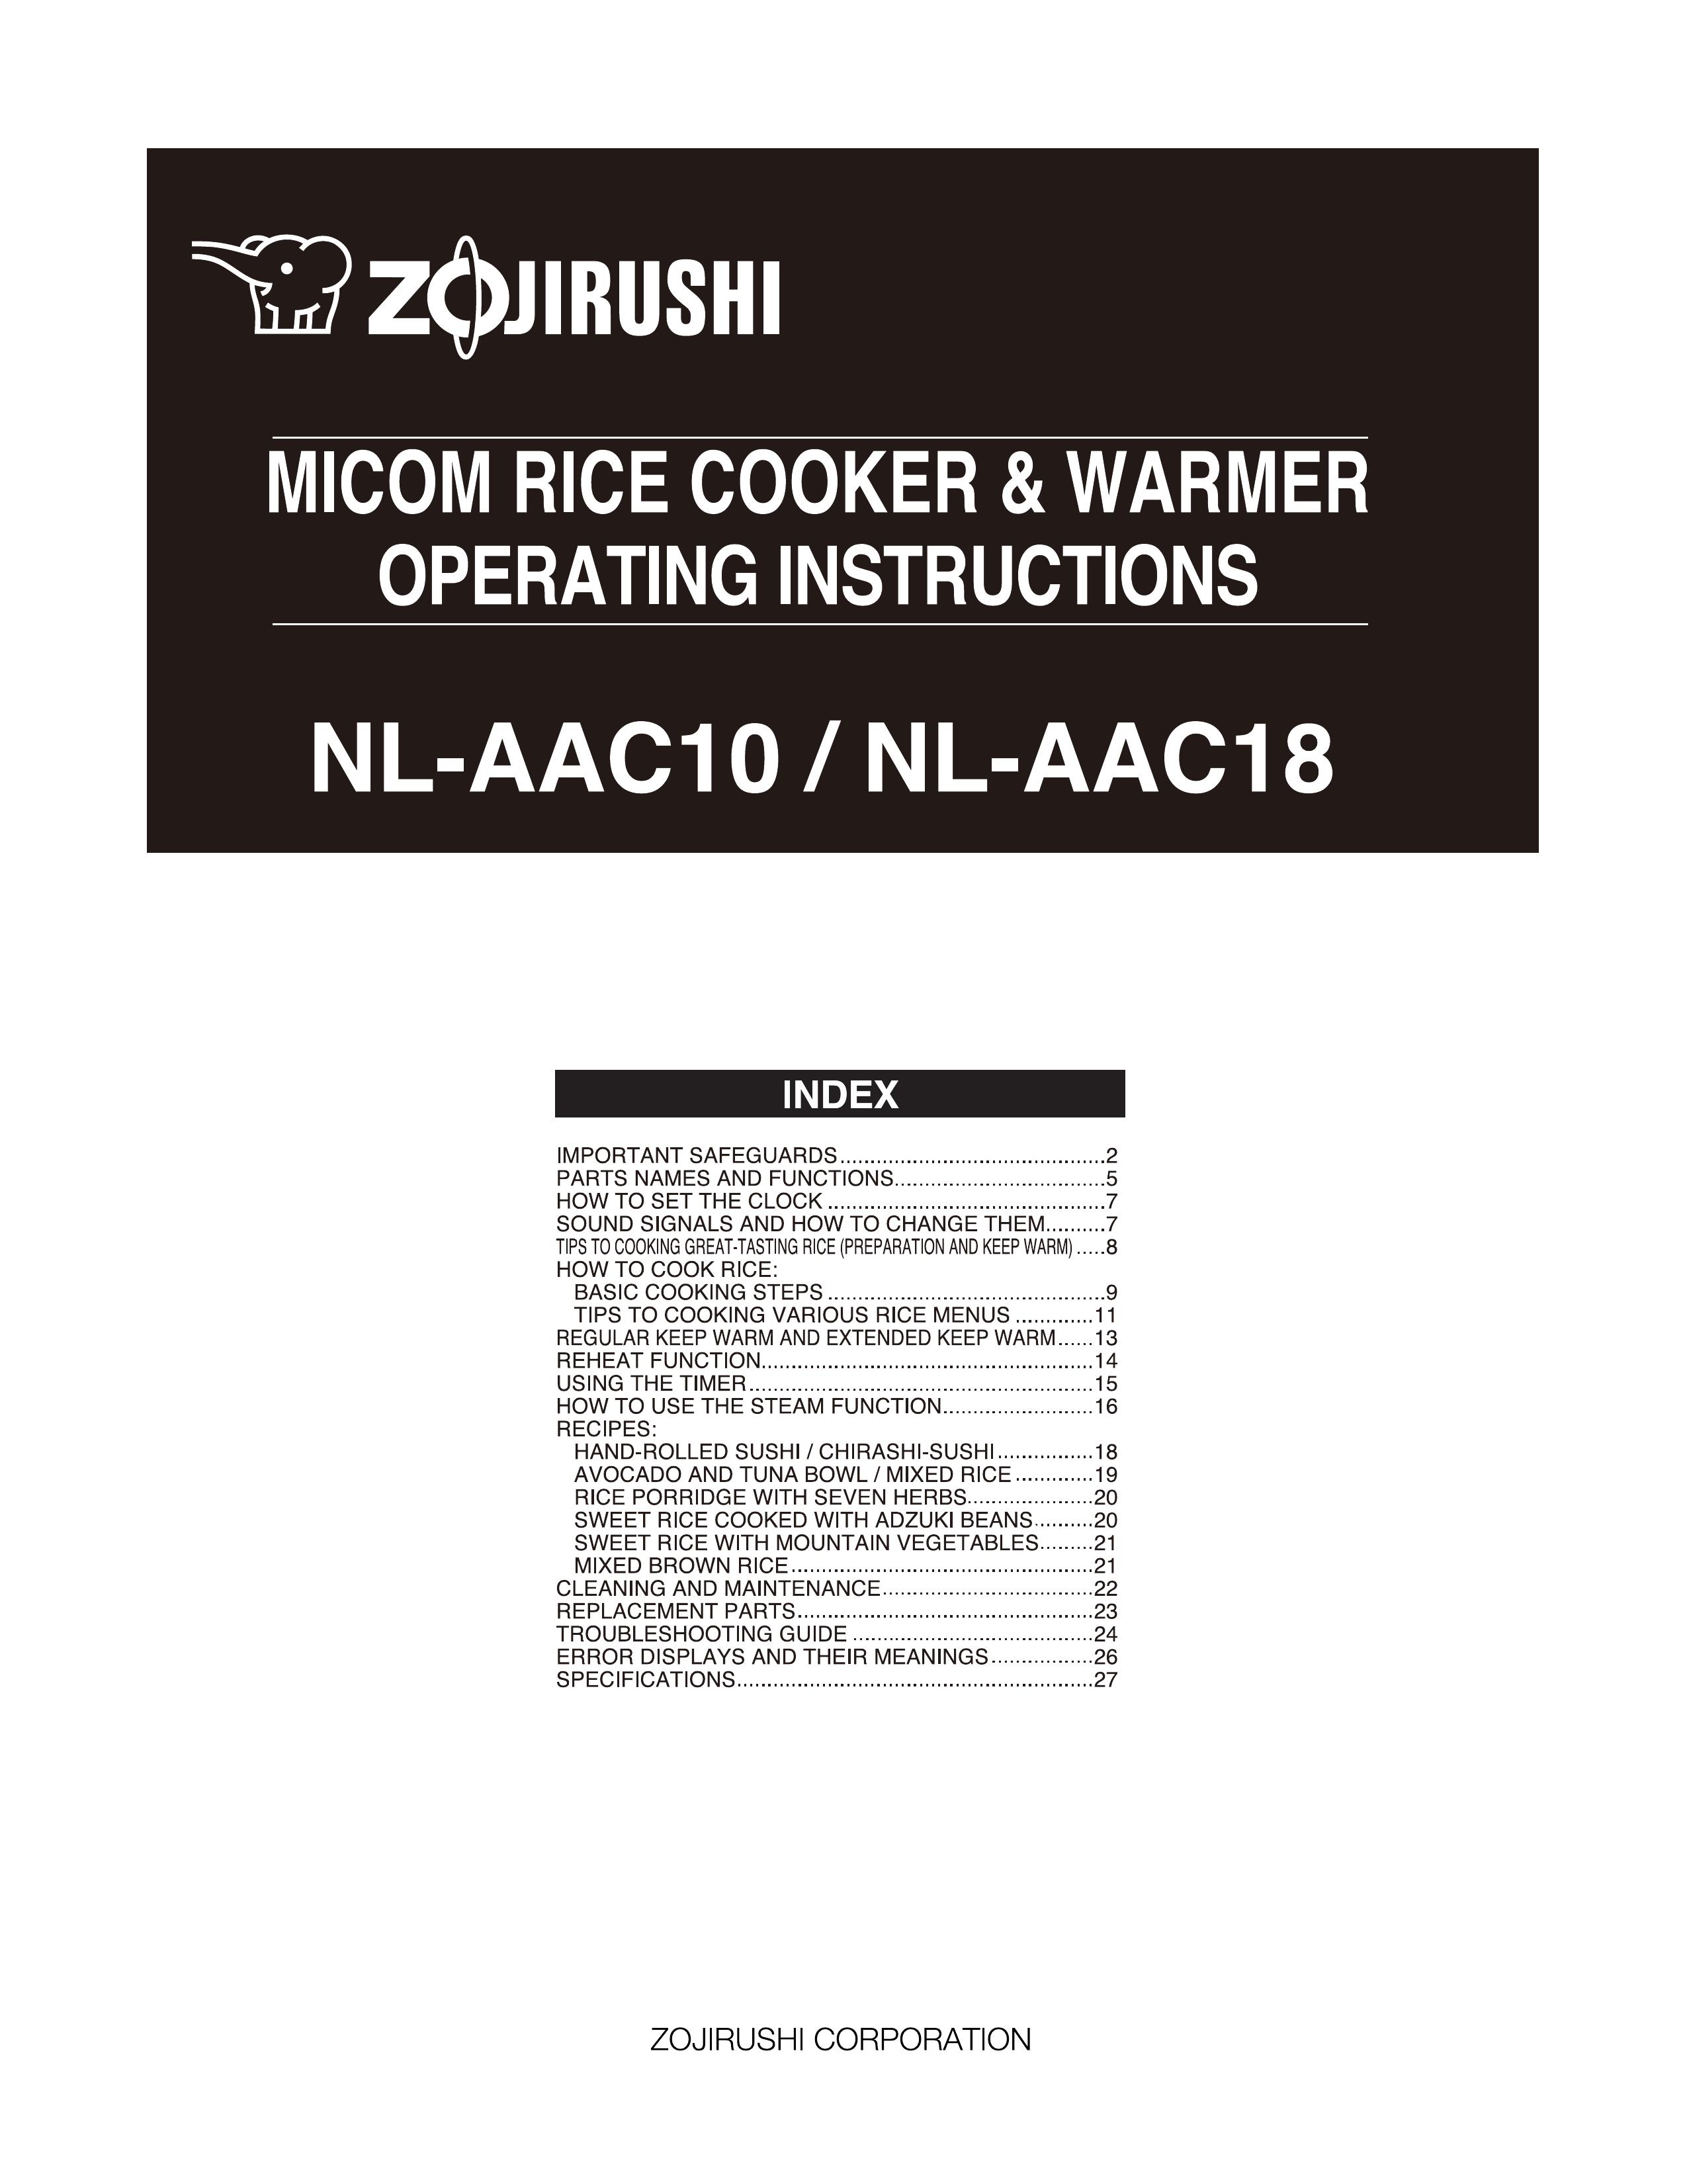 Zojirushi NL-AAC10 Rice Cooker User Manual